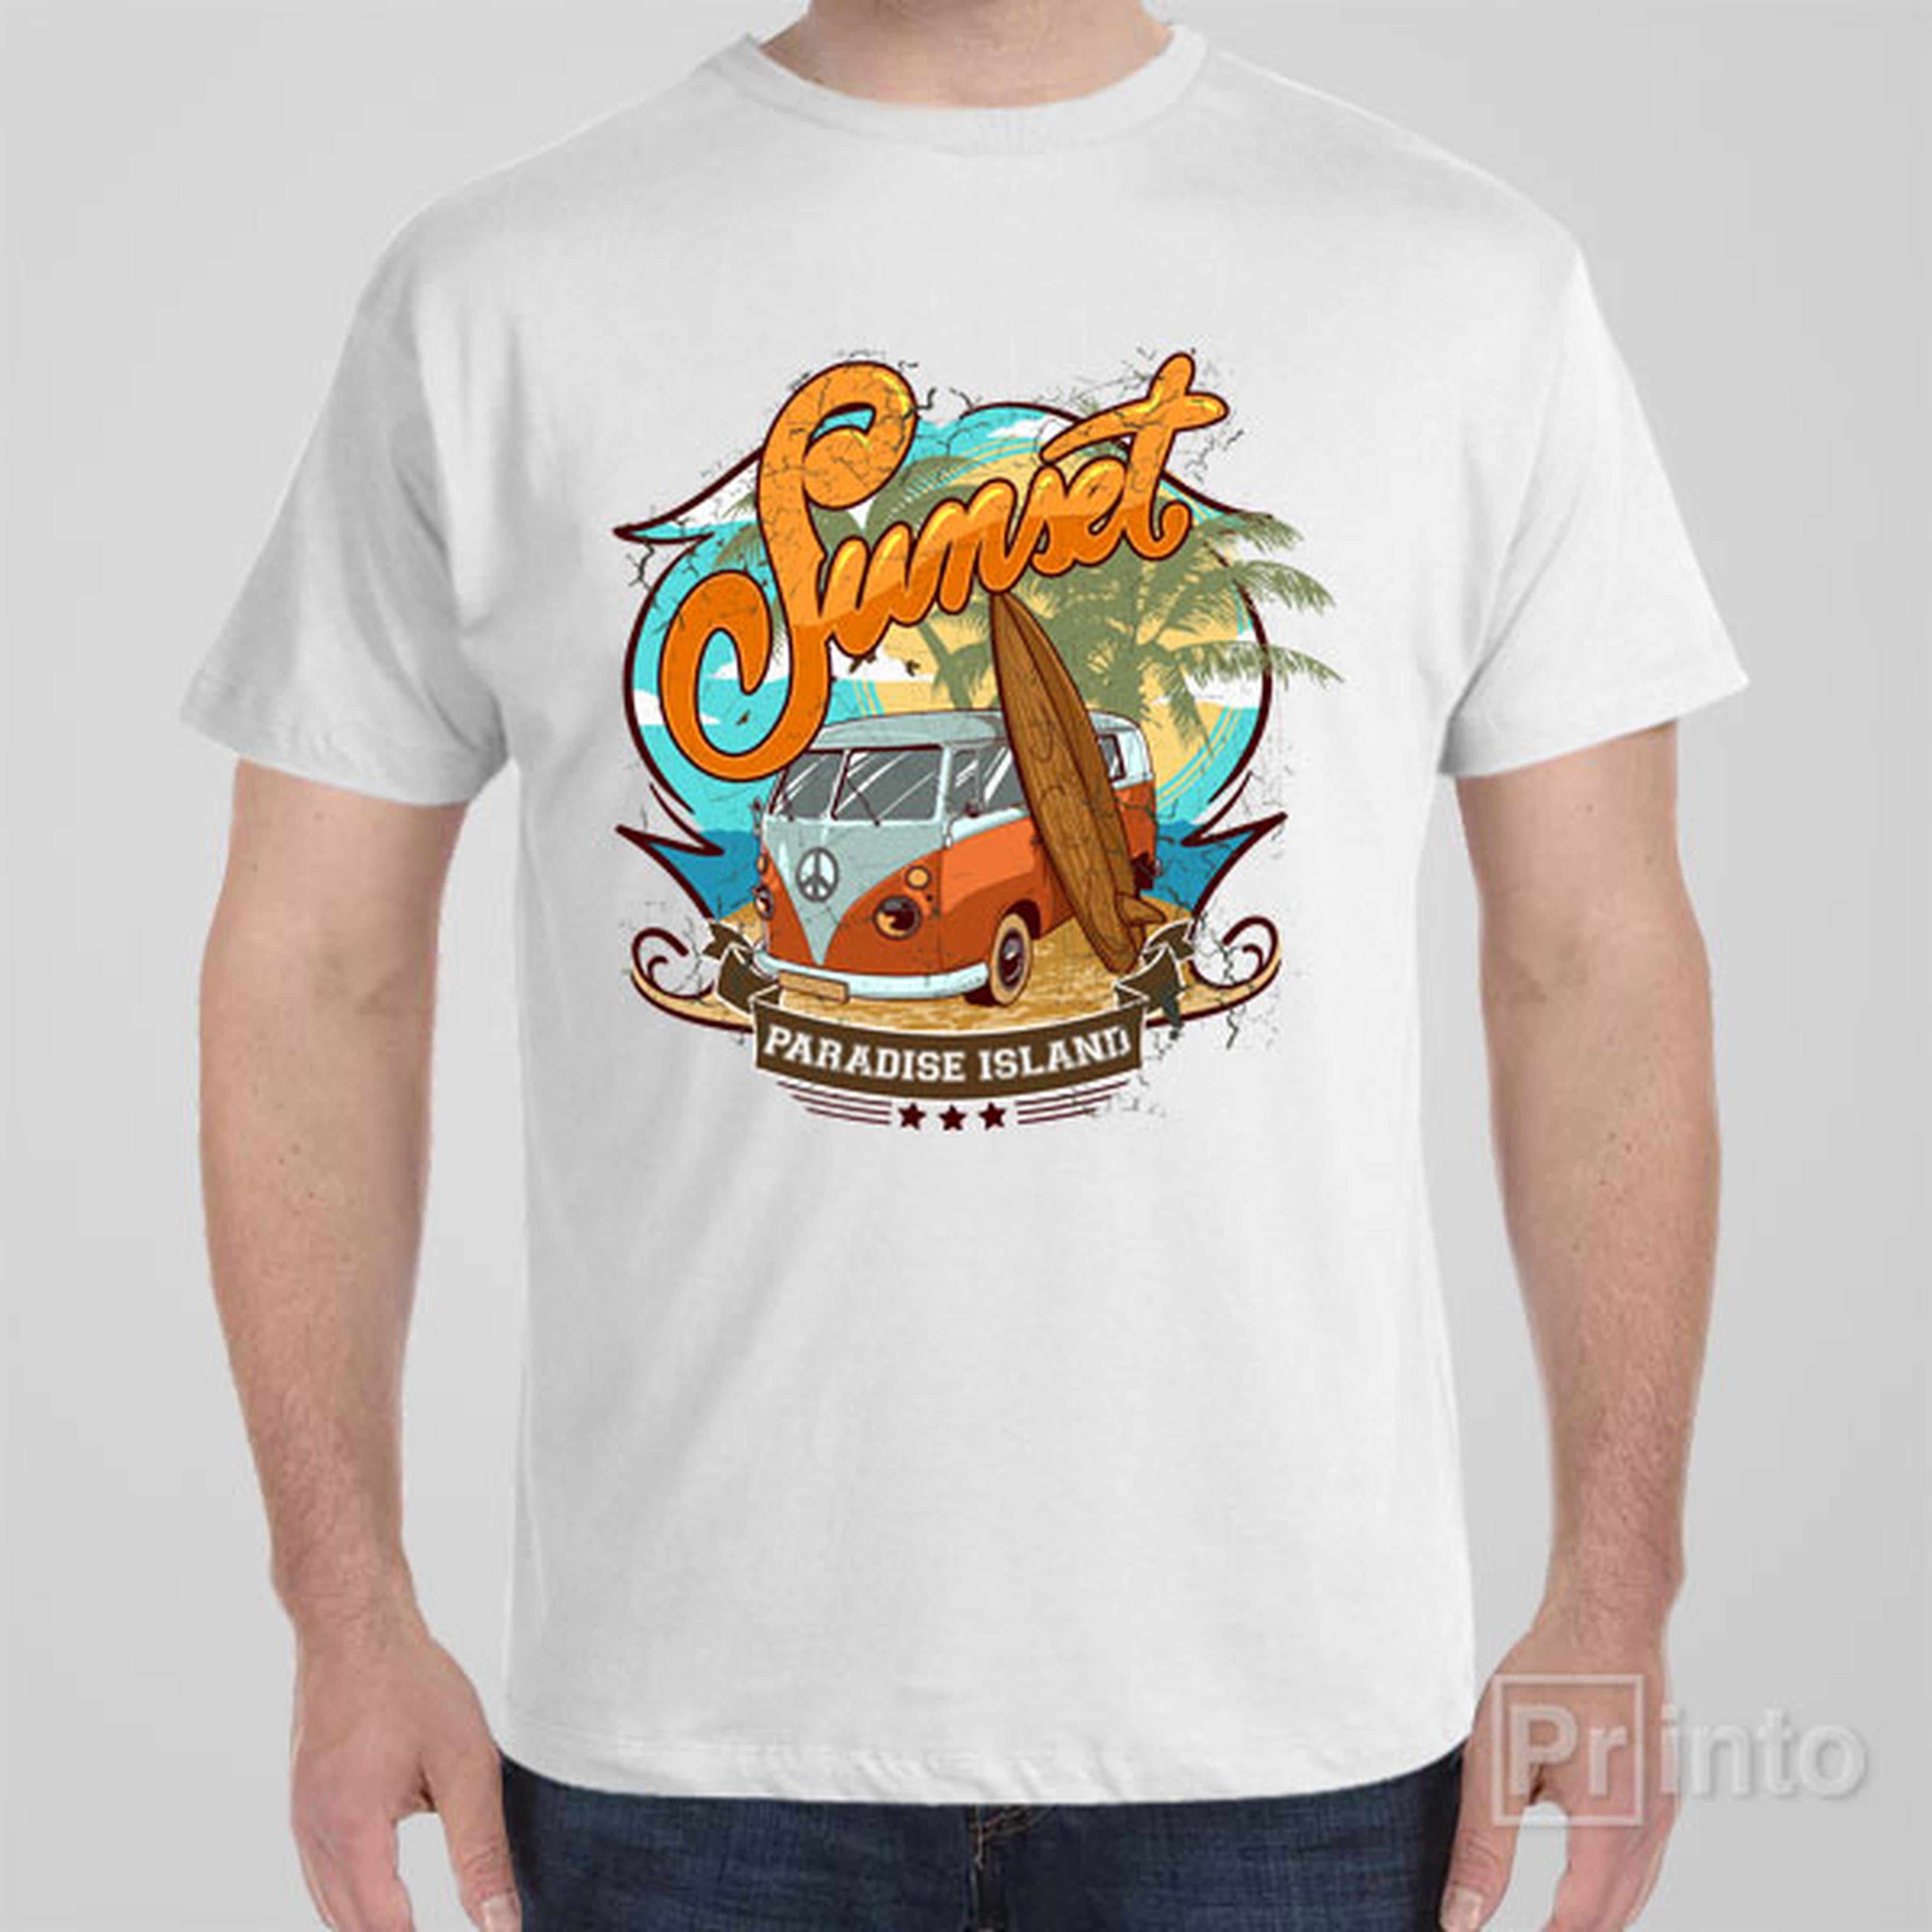 paradise-island-t-shirt